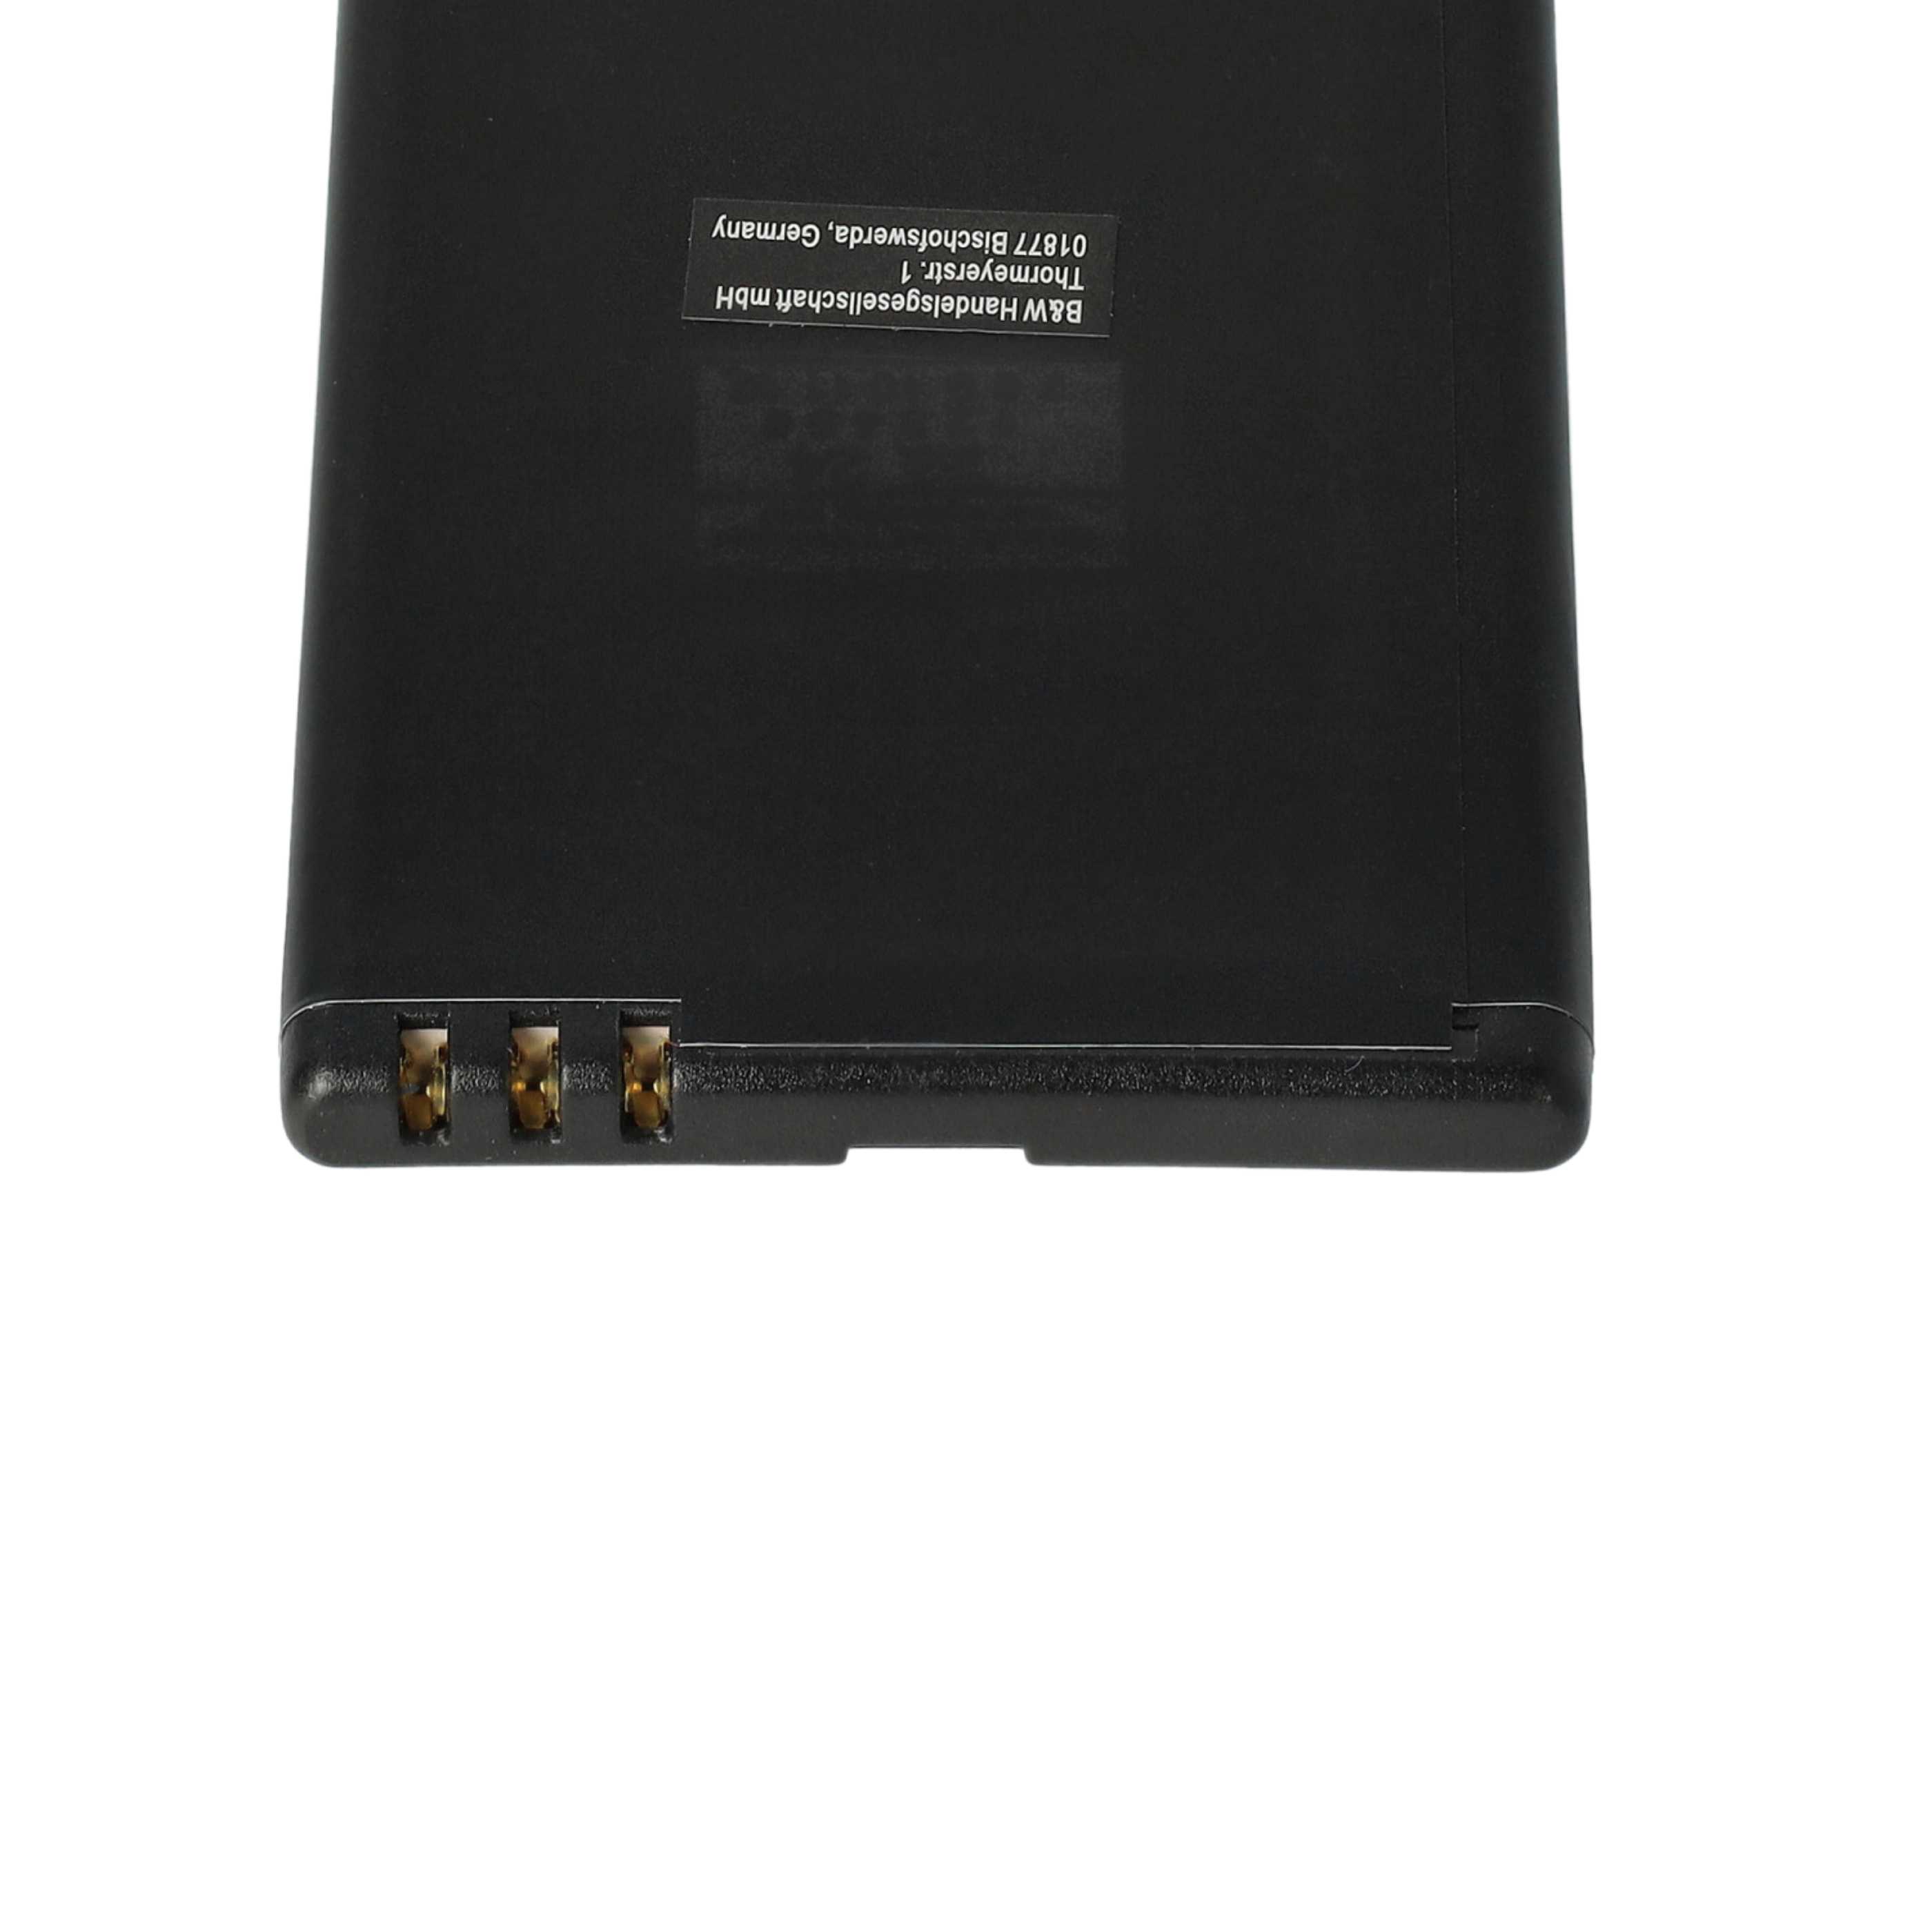 Mobile Phone Battery Replacement for Aligator D243, BL-6900, BP-140, A800BAL - 1700mAh 3.7V Li-Ion